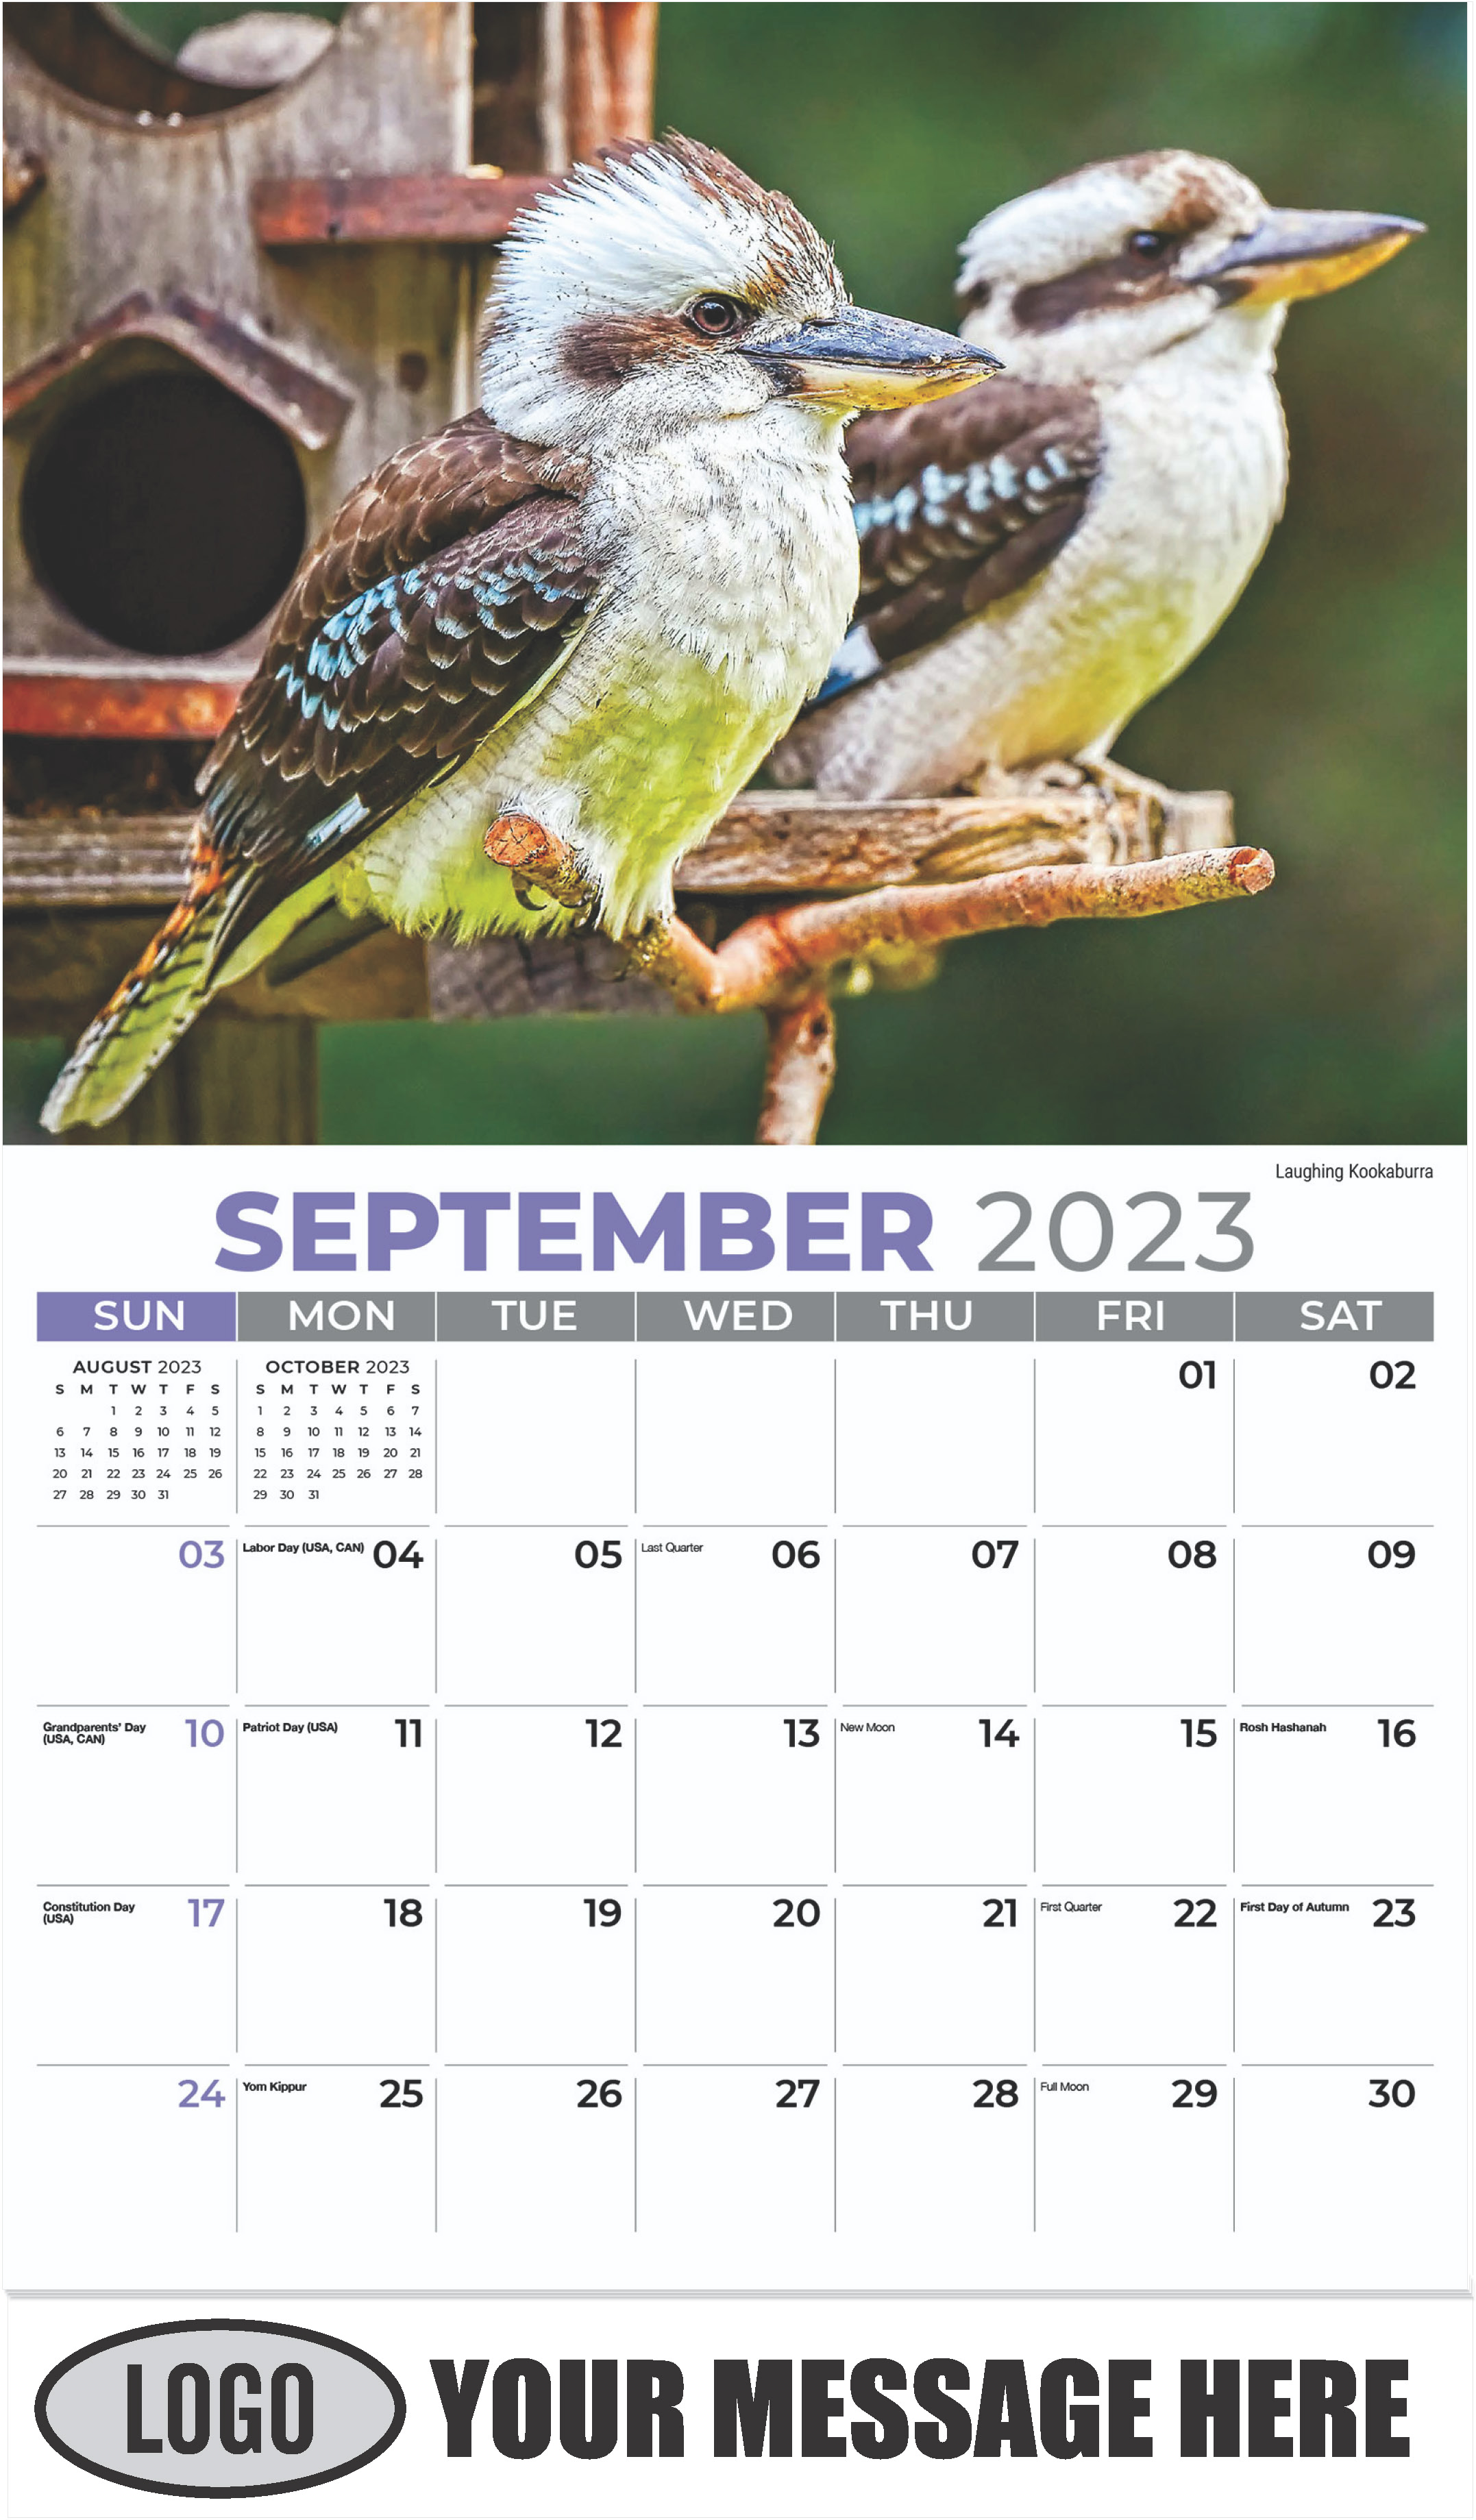 Laughing Kookaburra - September - International Wildlife 2023 Promotional Calendar